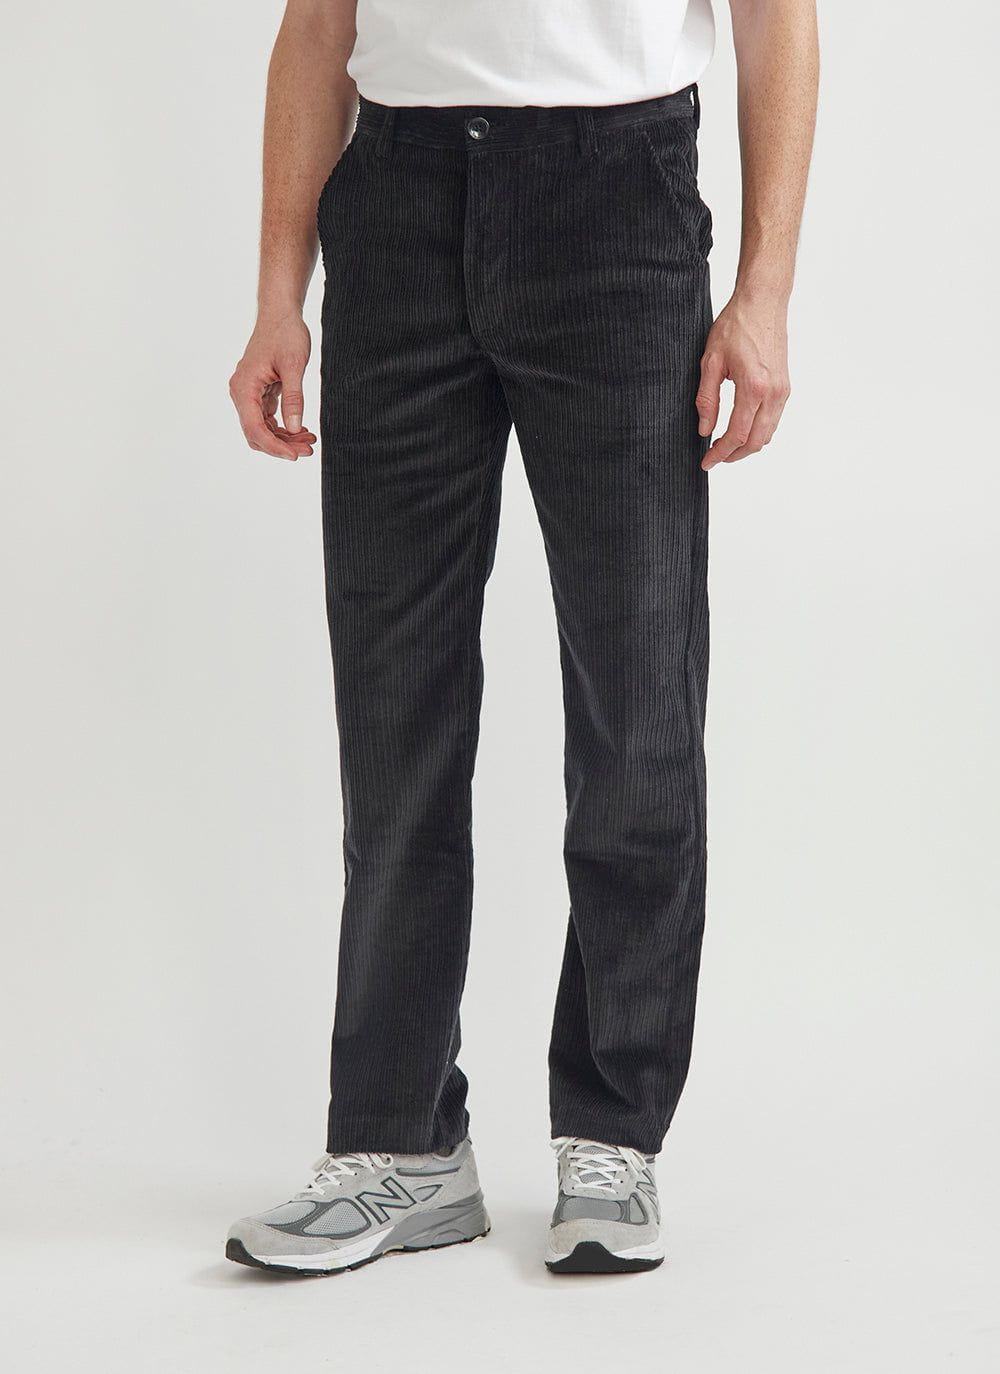 Kissonic Men's Casual Loose Elastic Waist Corduroy Pants Wide Leg Trousers( Black-S) at Amazon Men's Clothing store